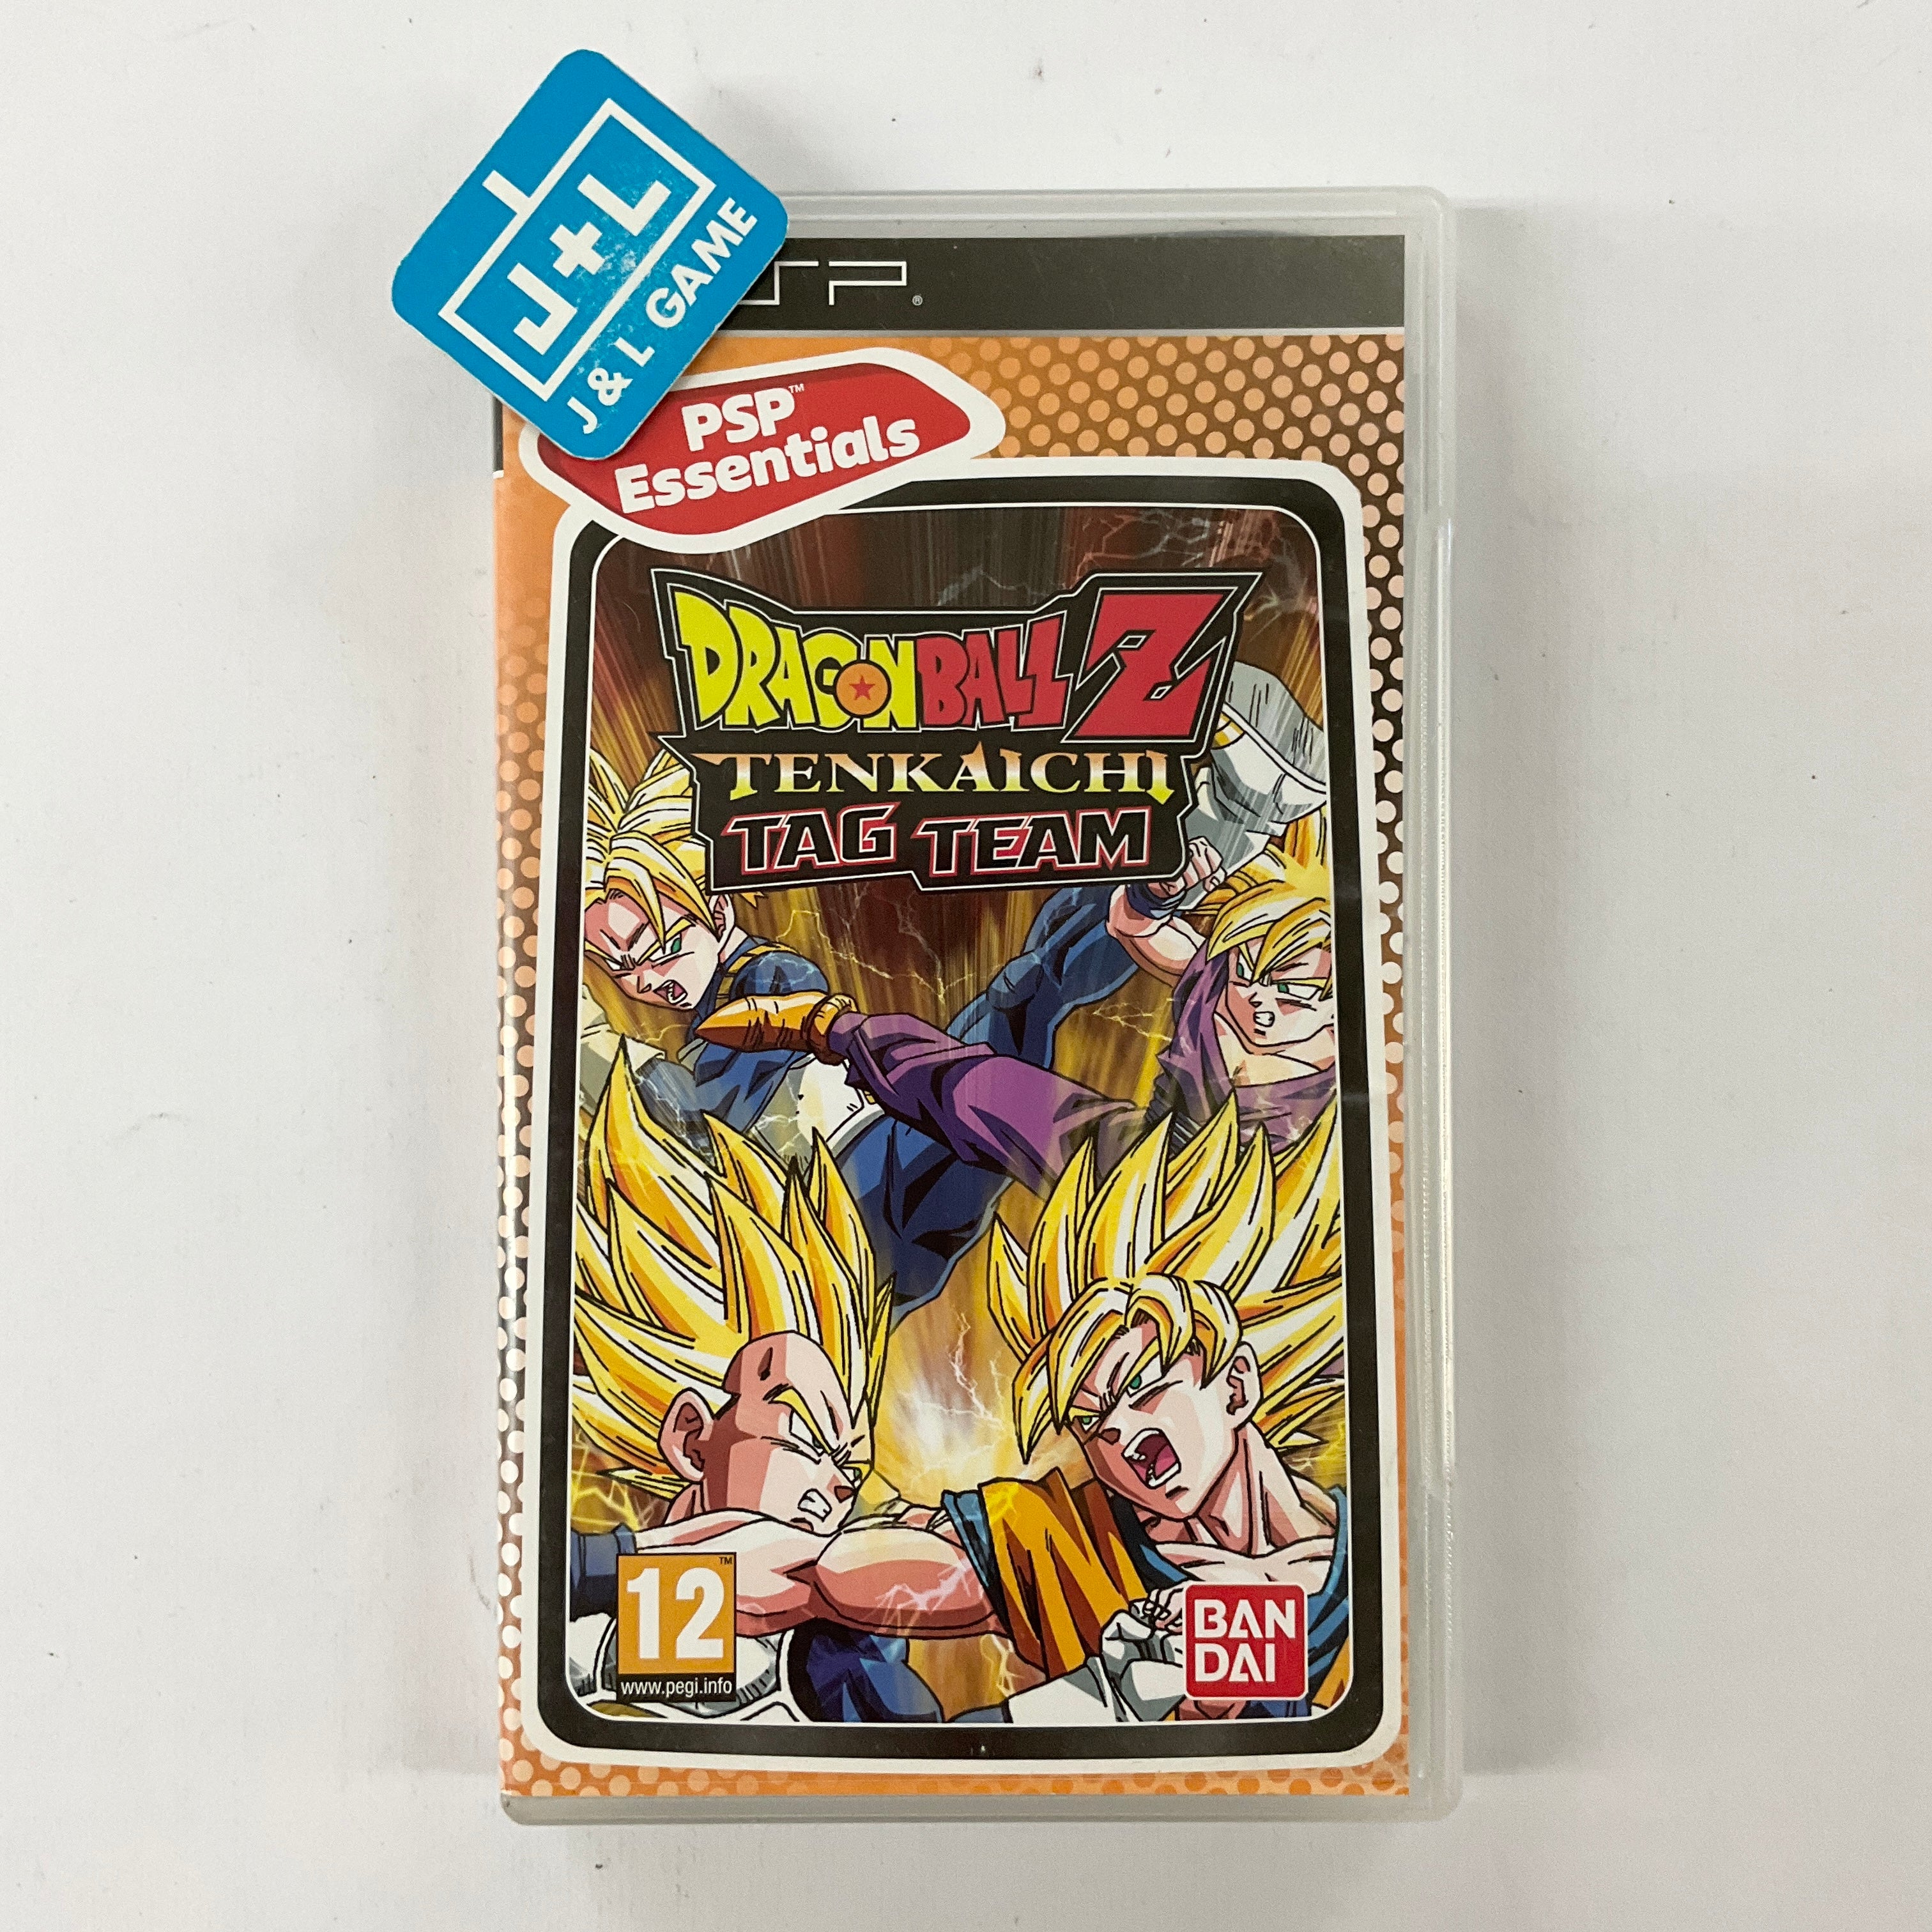 Dragon Ball Z: Tenkaichi Tag Team (PSP Essentials) - Sony PSP [Pre-Owned] (European Import) Video Games Namco Bandai Games   